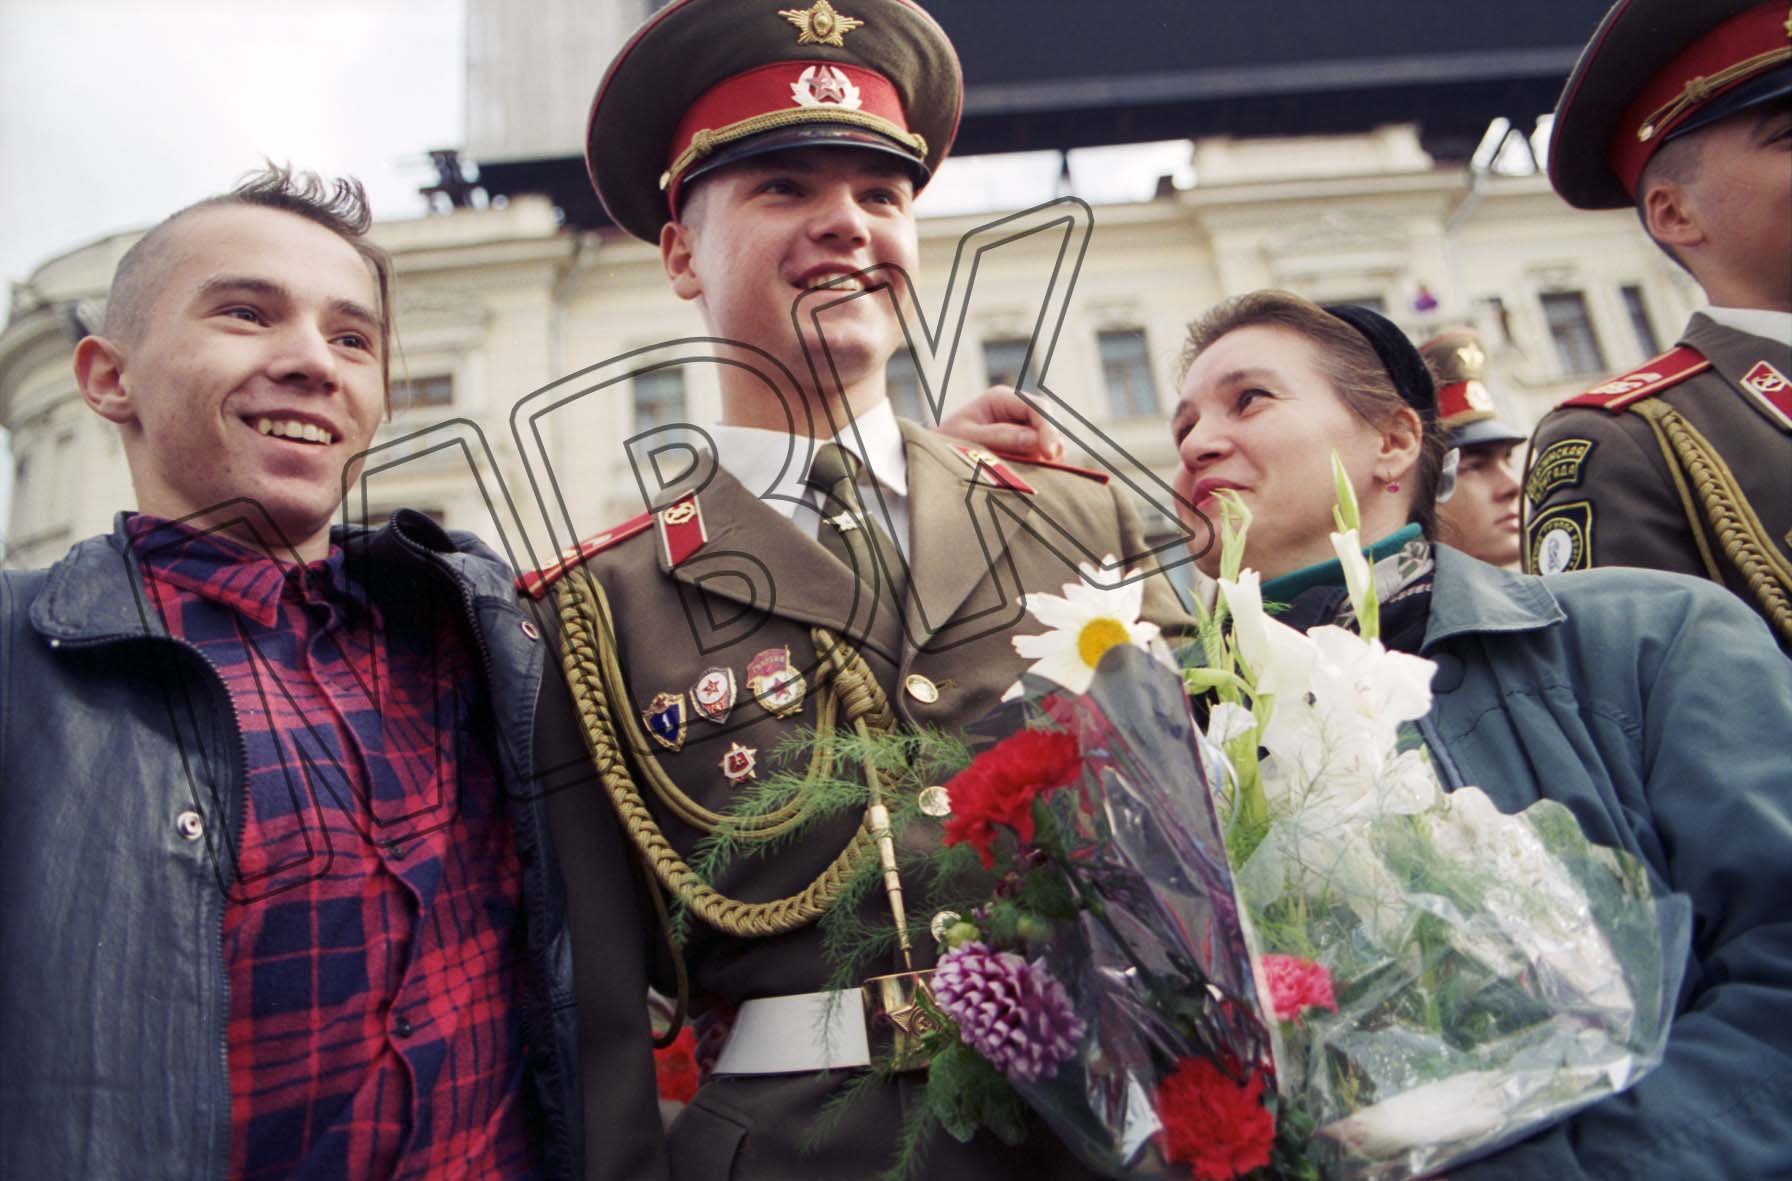 Fotografie: Begrüßung der Berlin-Brigade durch die Moskauer Bevölkerung, 3. September 1994 (Museum Berlin-Karlshorst RR-P)